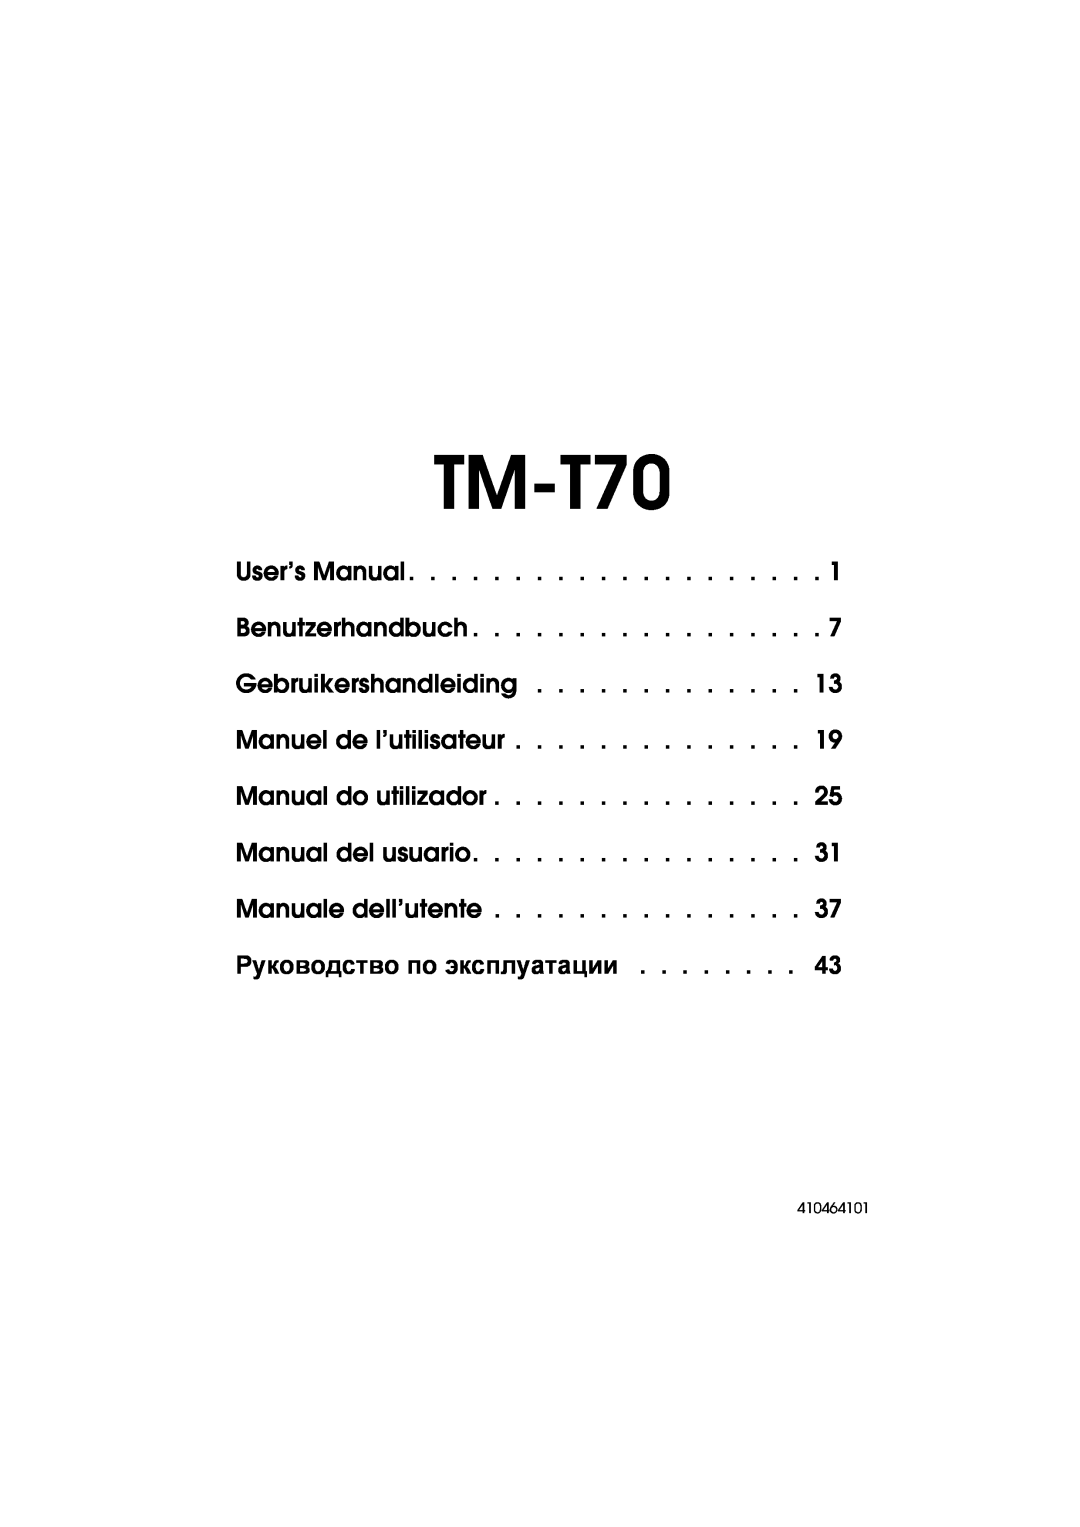 Seiko Group TM-T70 user manual Руководство по эксплуатации, 410464101 